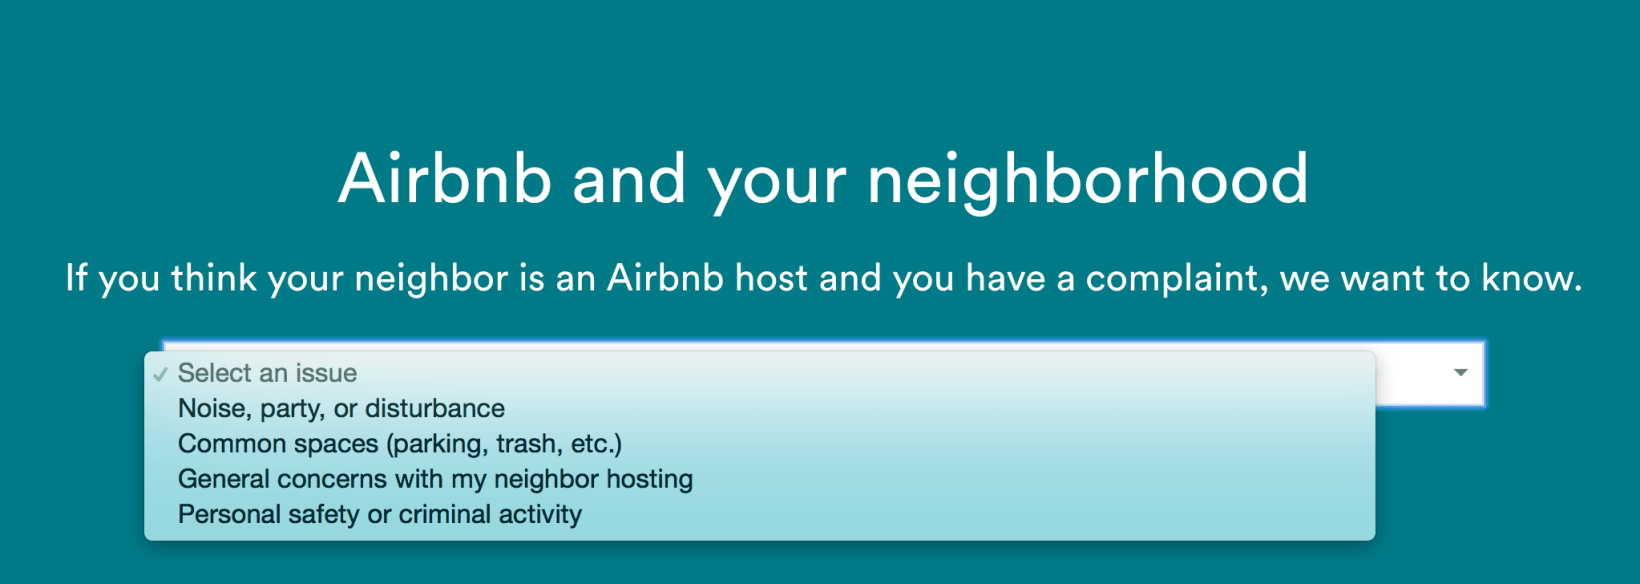 airbnb neighbors